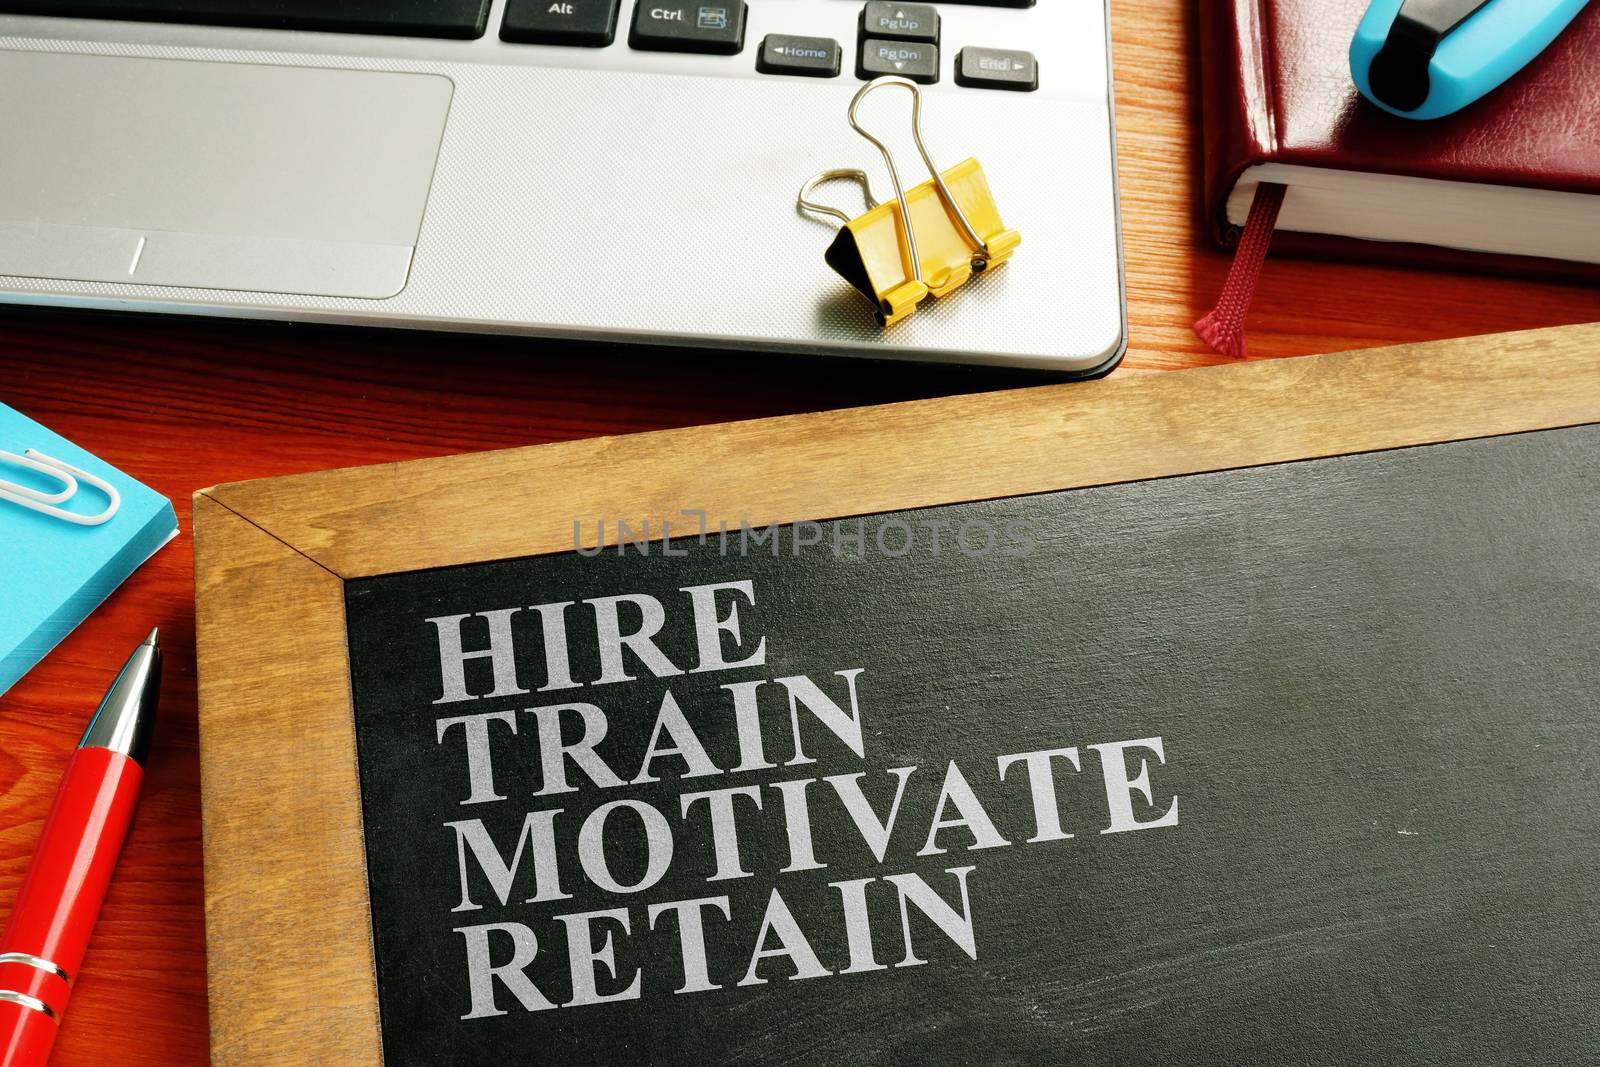 Staff hire, train, motivate and retain written on the blackboard. by designer491